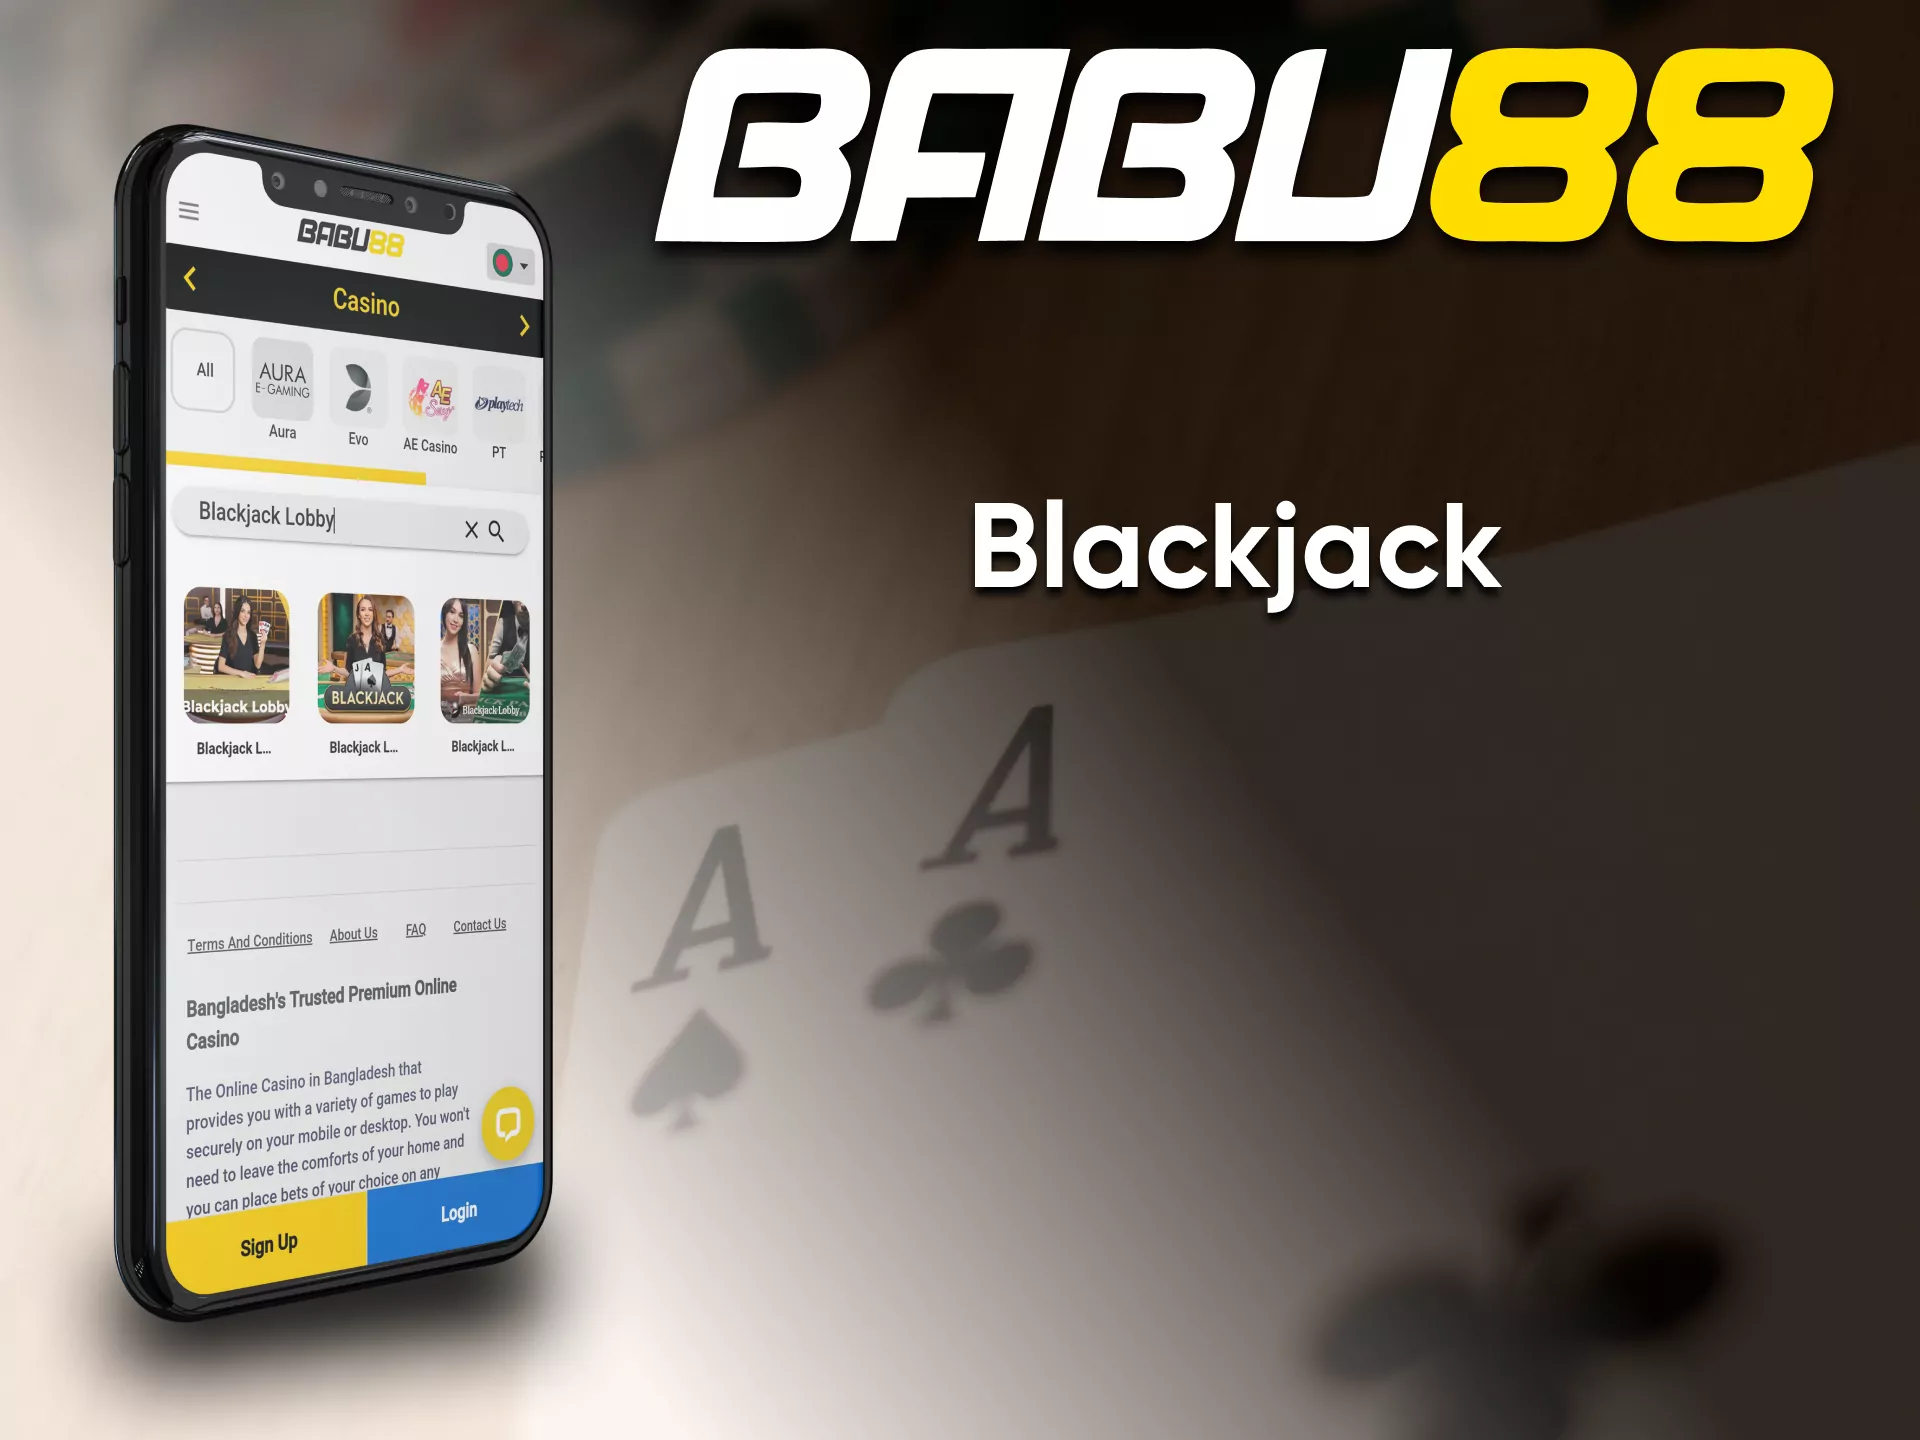 Play Blackjack through the Babu88 app.